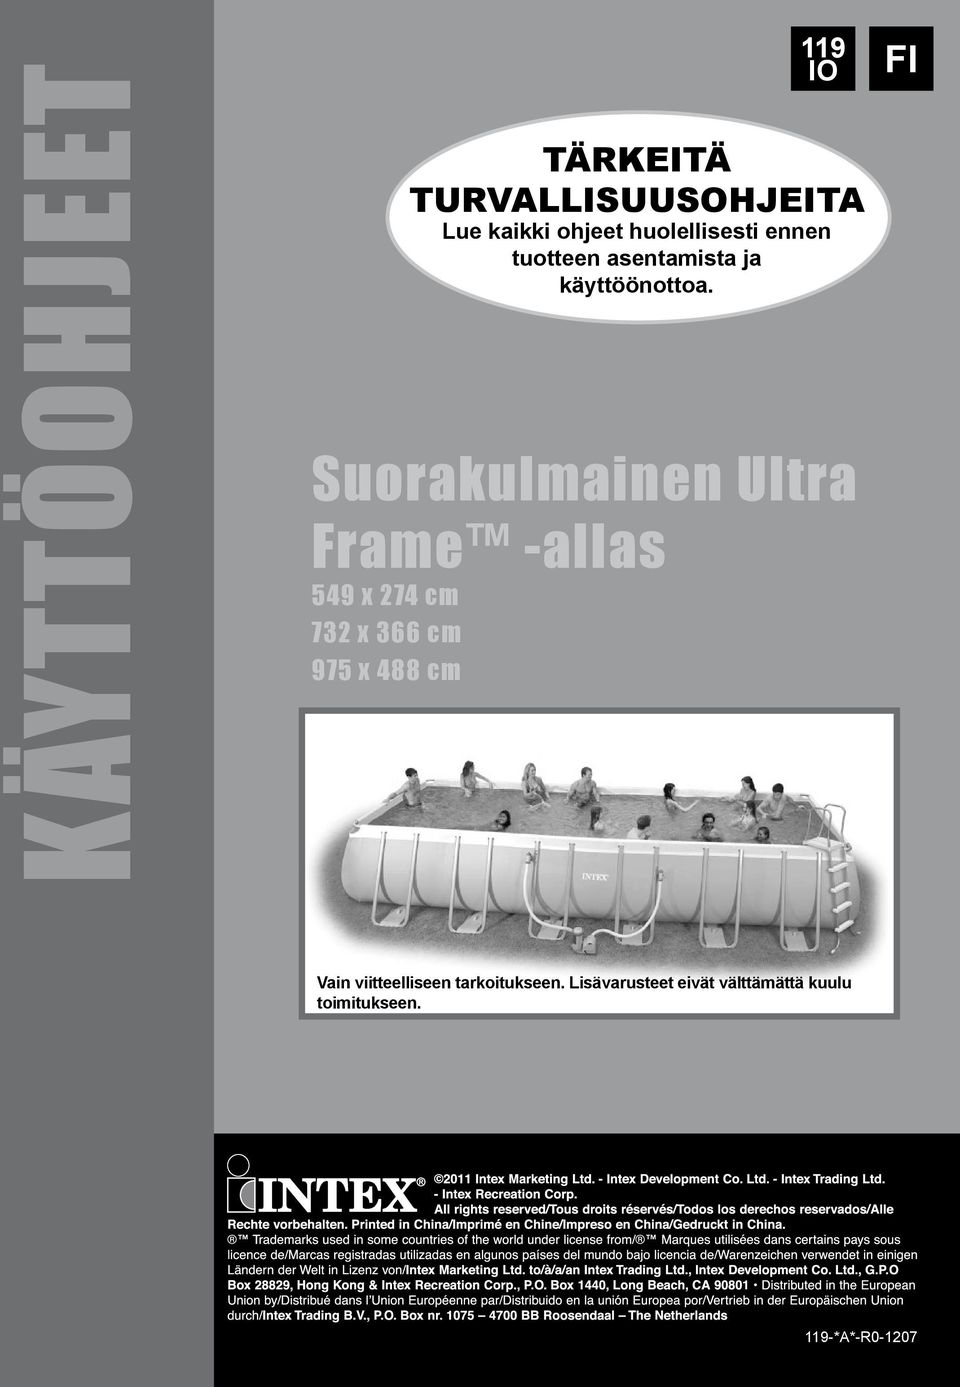 Suorakulmainen Ultra Frame -allas 549 x 274 cm 732 x 366 cm 975 x 488 cm